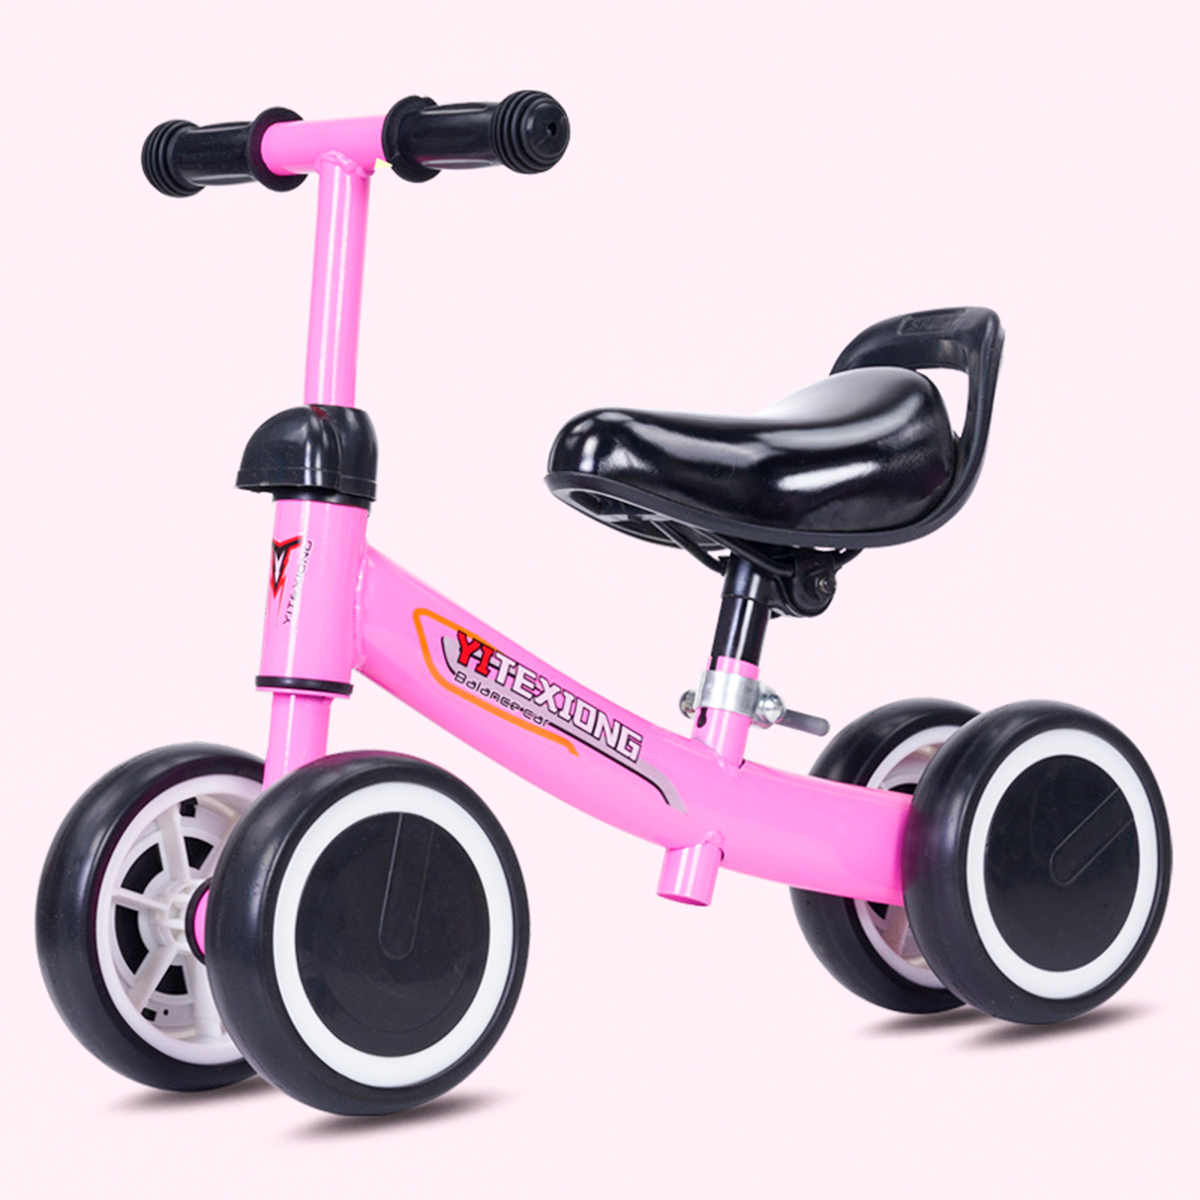 Baby-No-Pedals-Balance-Bike-Kids-Children-Toddler-OutdoorIndoor-Walker-Bicycle-for-1-3-Years-Old-Boy-1829406